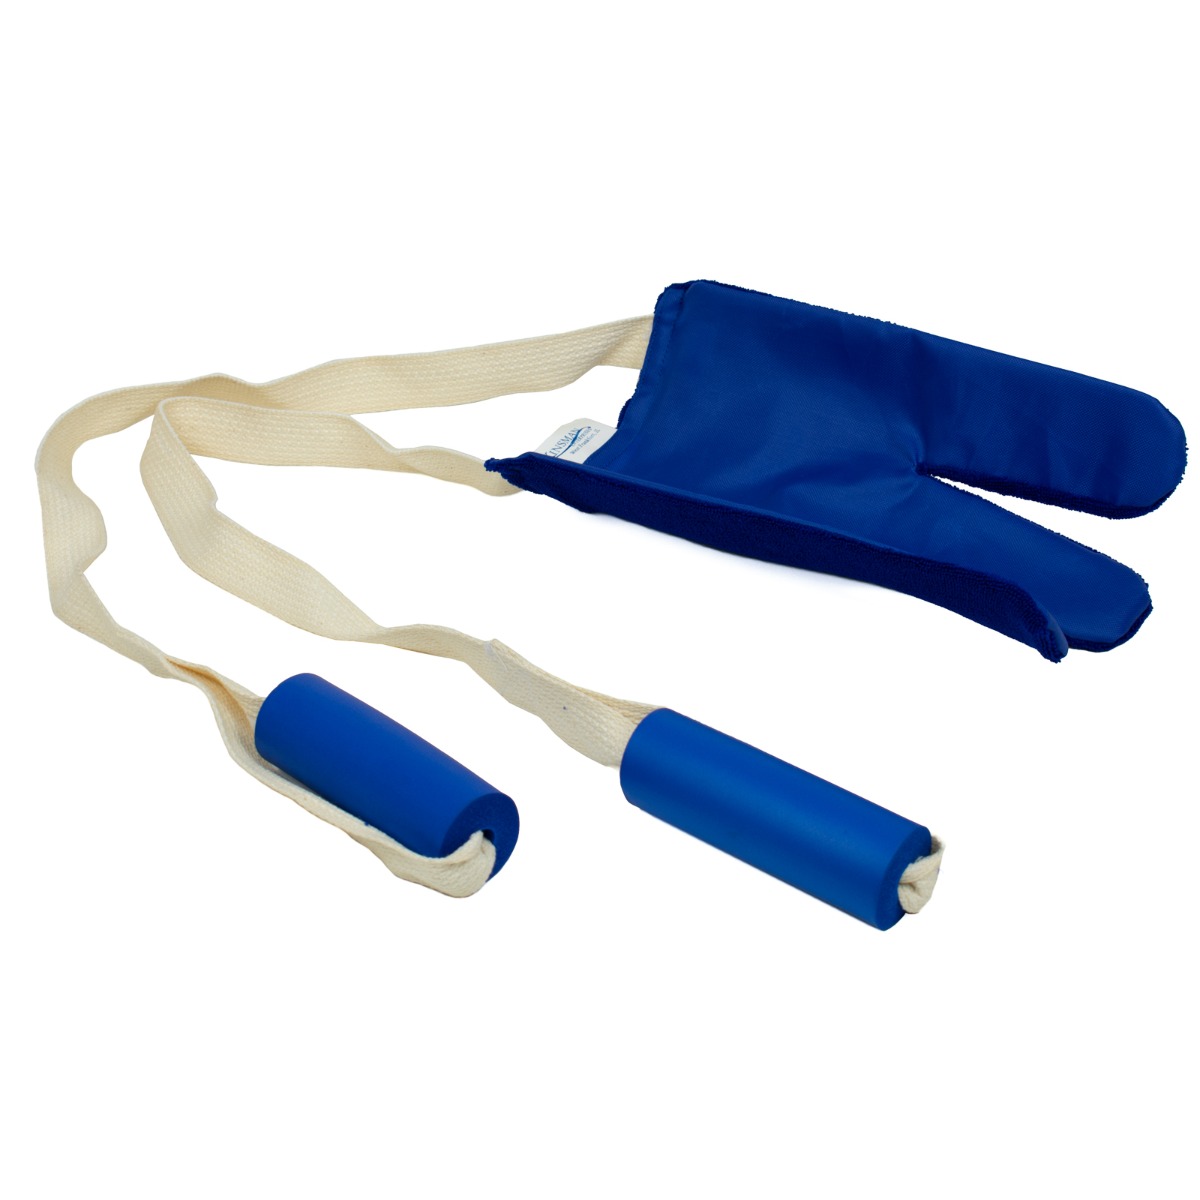 Flexible Sock Aid with Foam Handles
